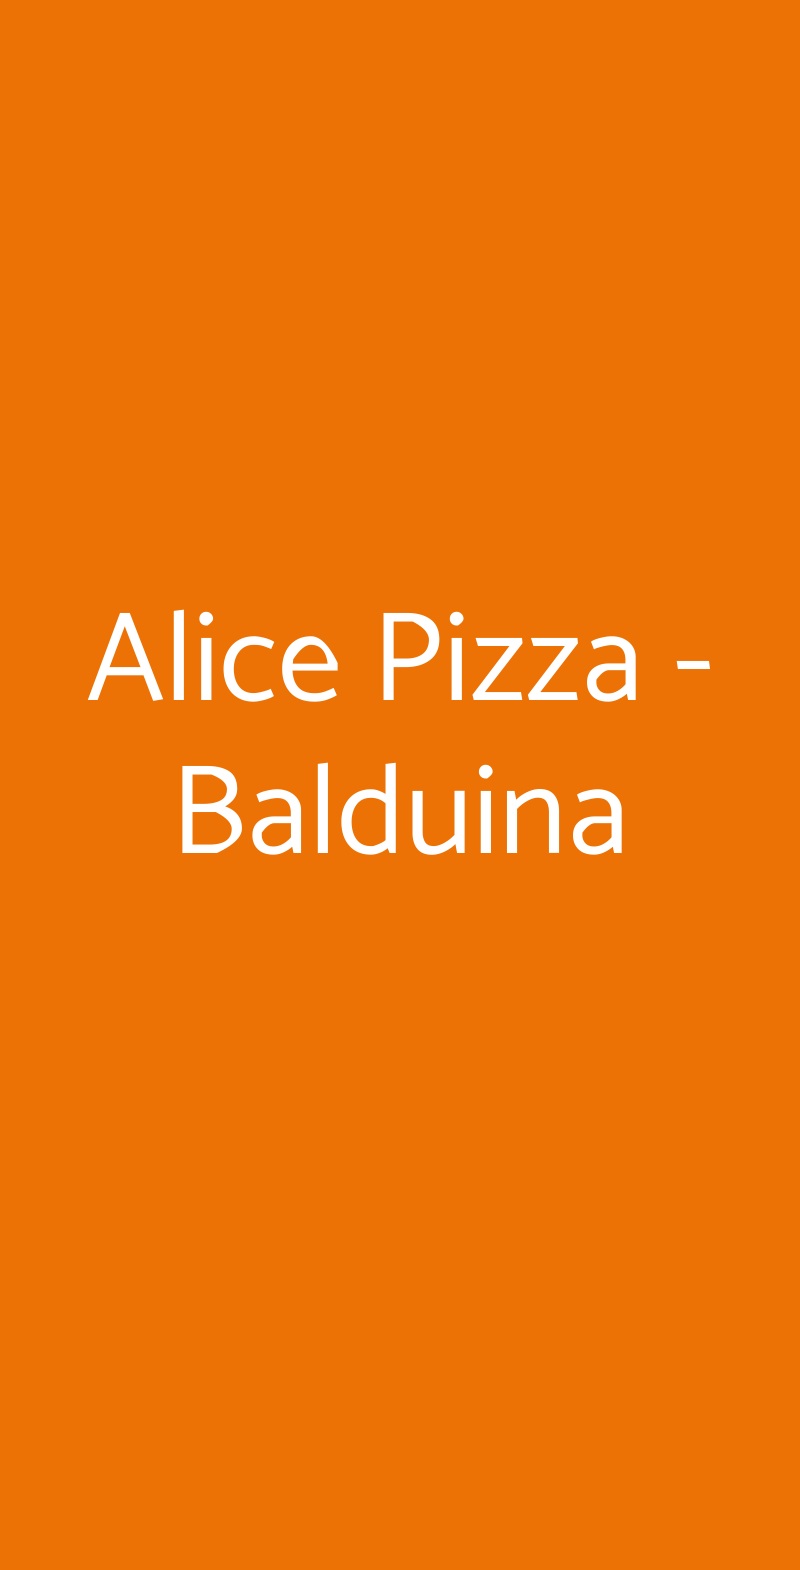 Alice Pizza - Balduina Roma menù 1 pagina